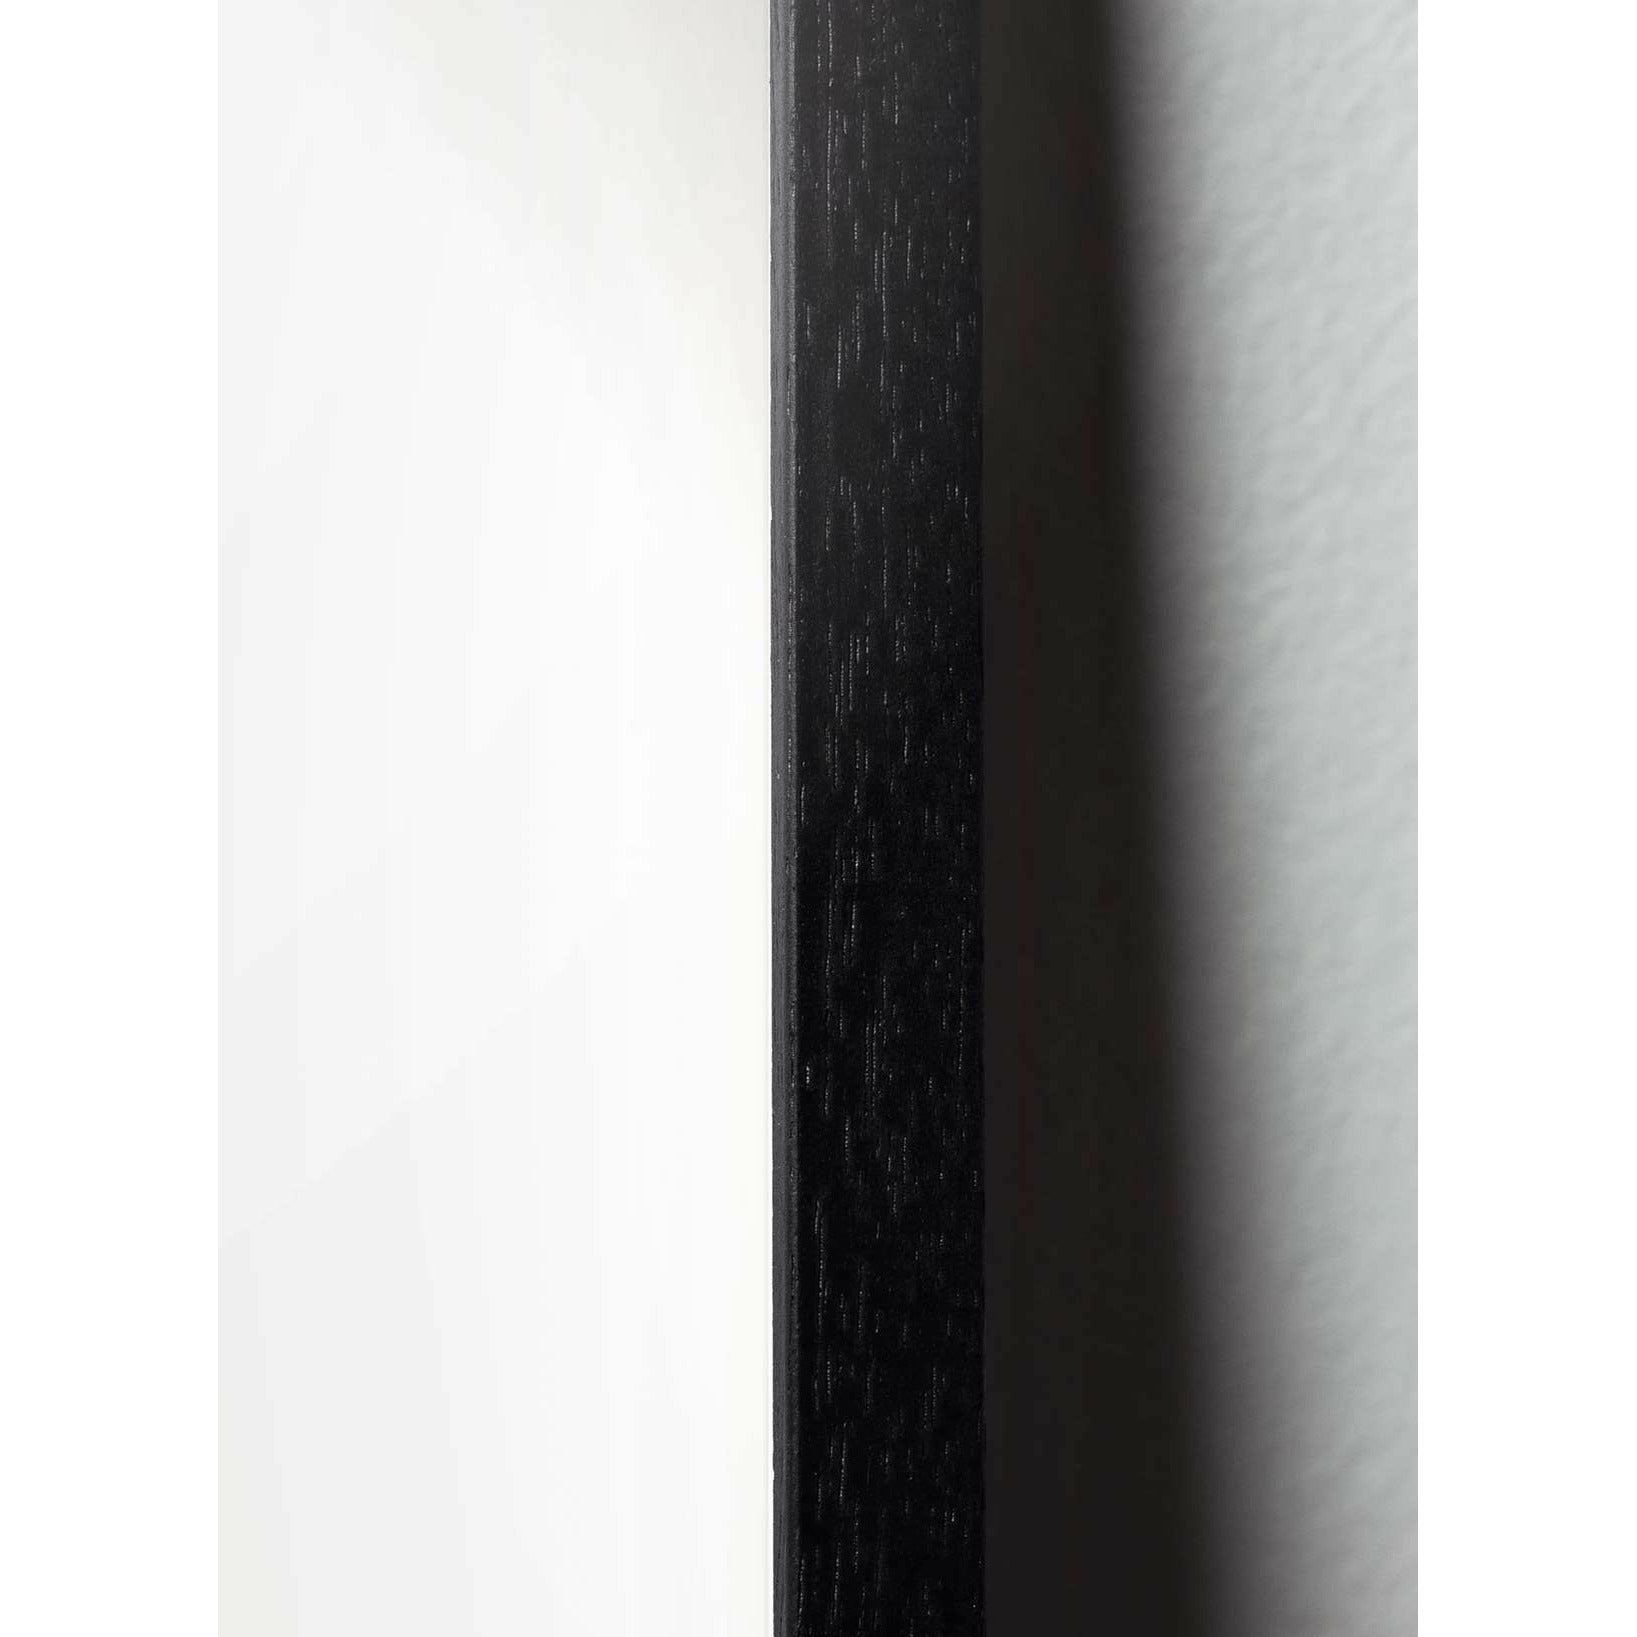 Brainchild Myrslag affisch, ram i svart målad trä A5, vit bakgrund